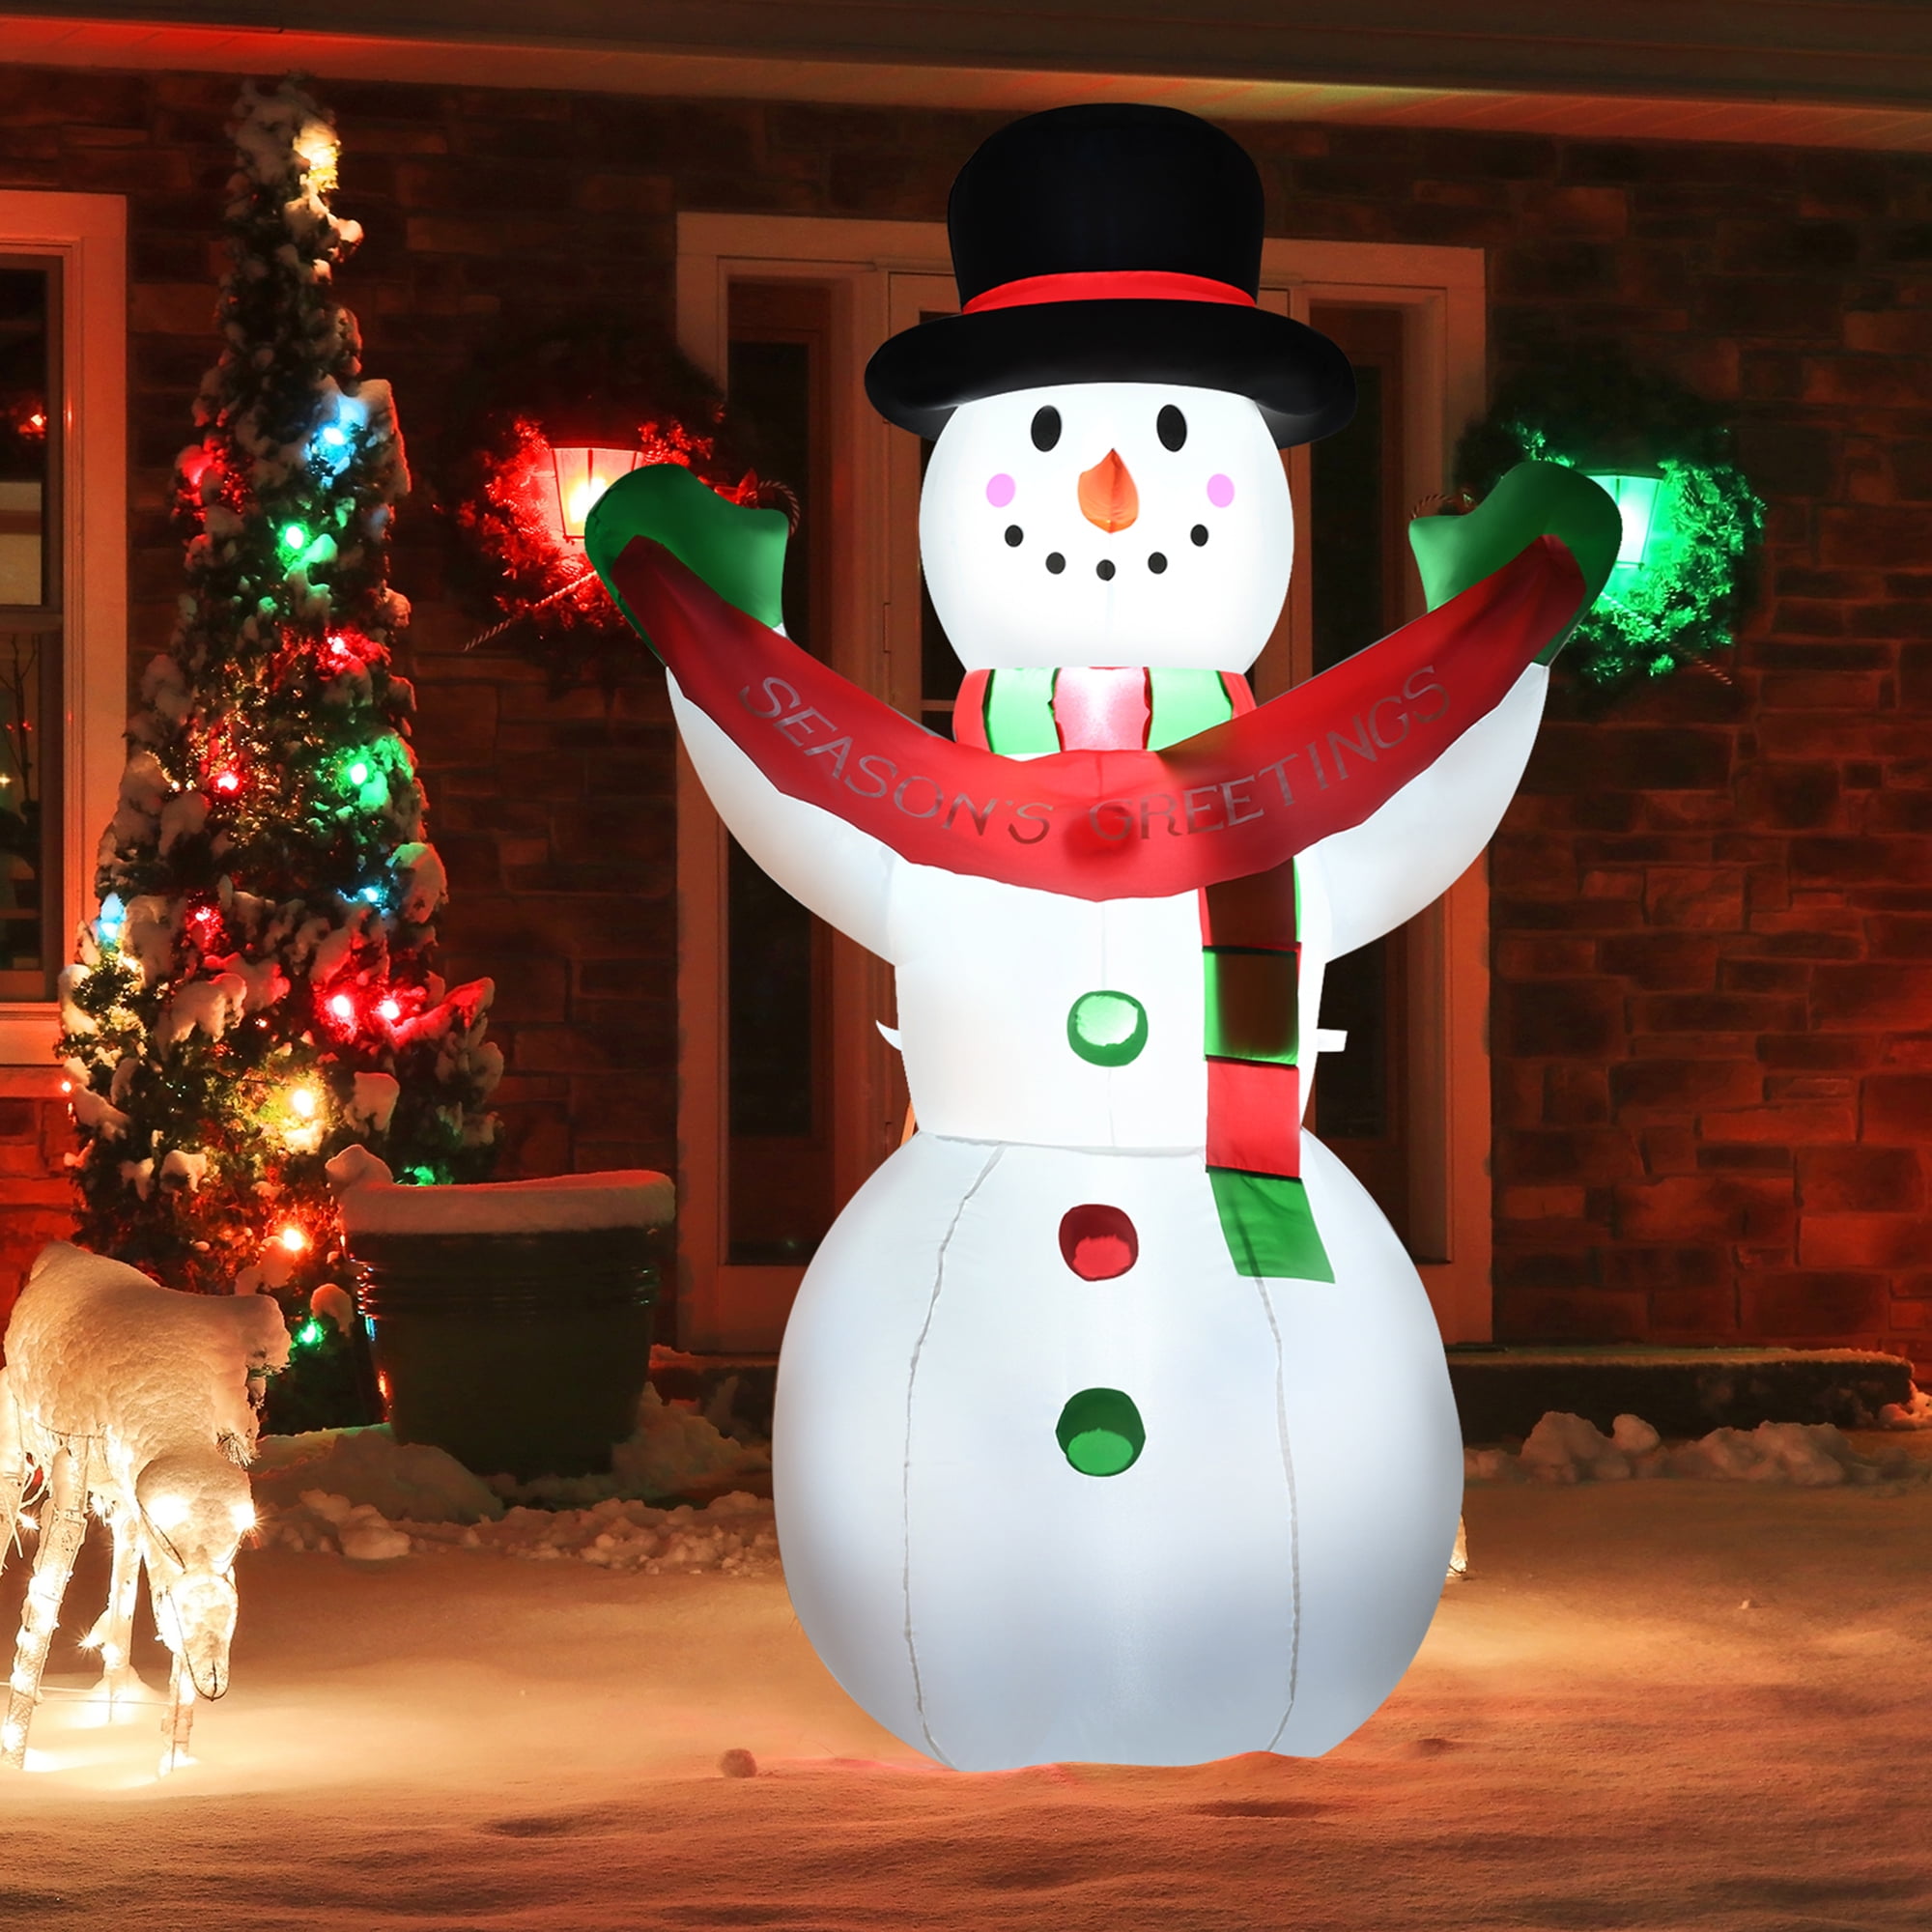 Singing Snowman Family Christmas Tree Decoration w/ LED Lights Decor 5.5" FT 